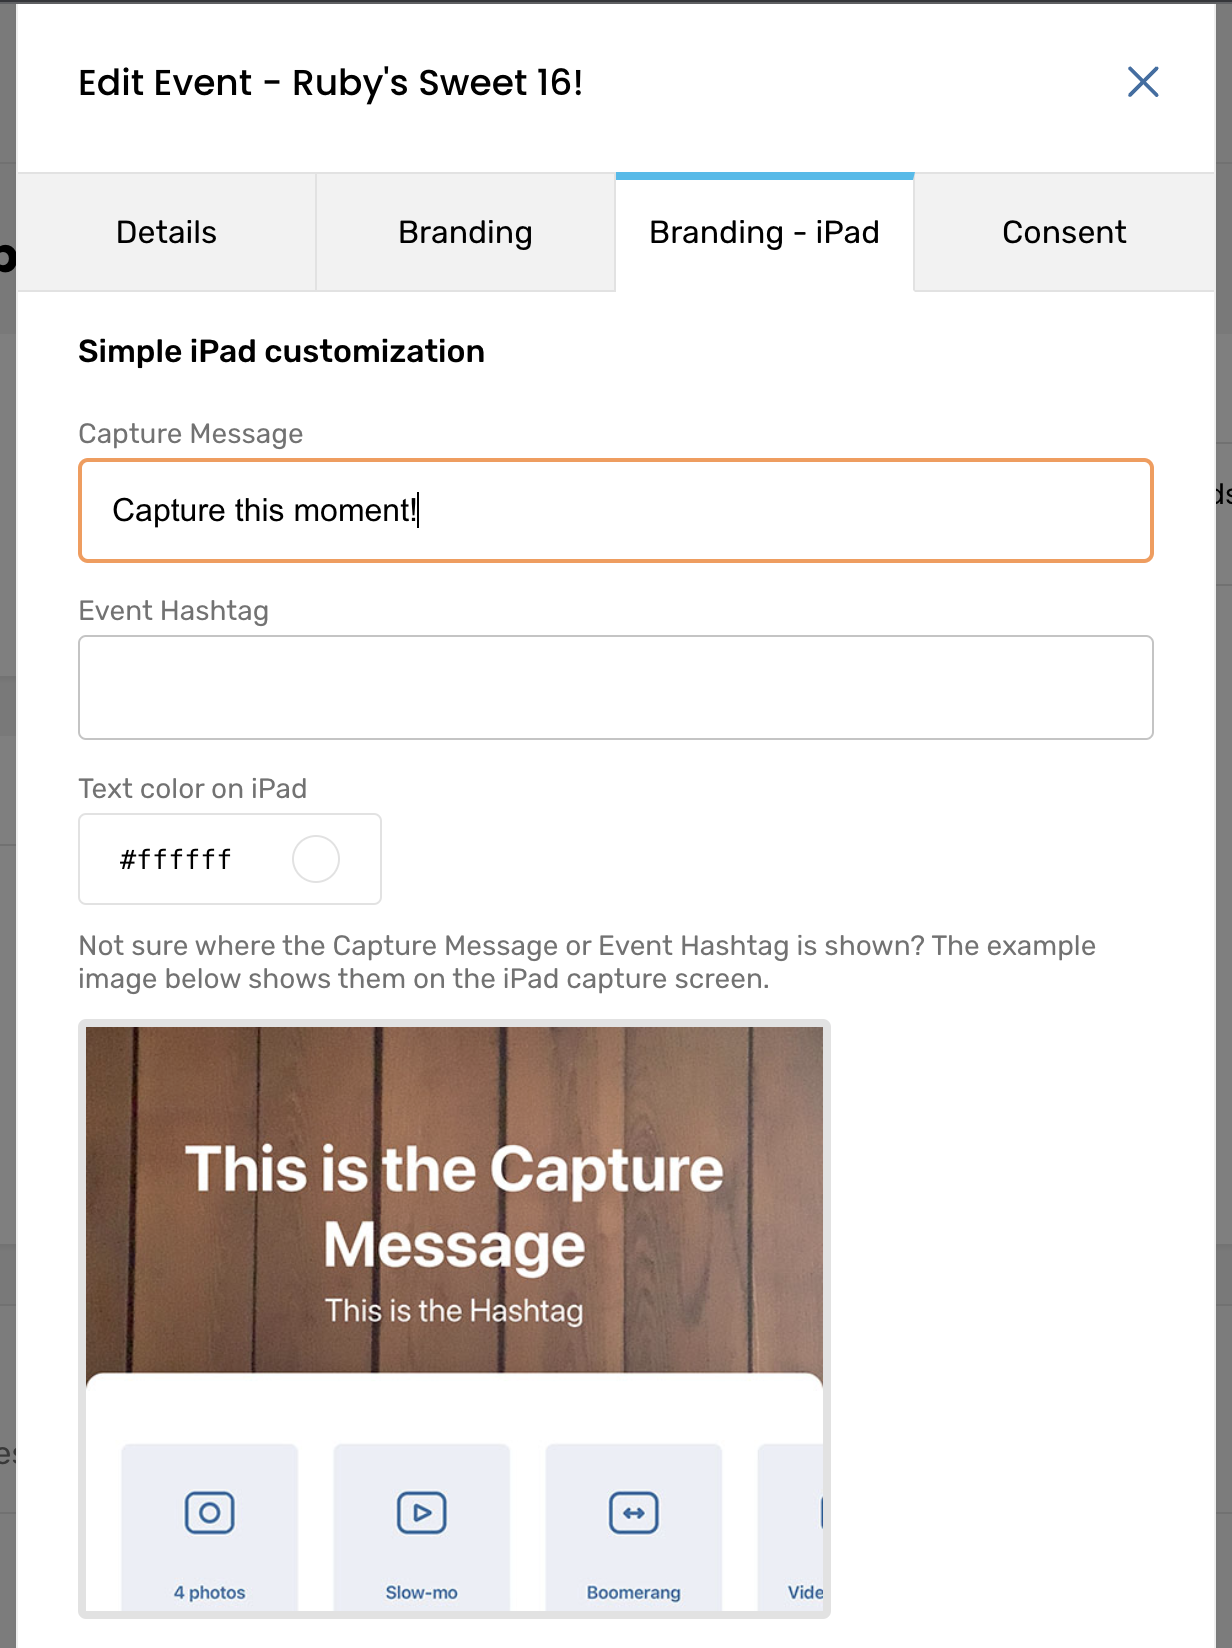 Editing an Event: iPad branding settings